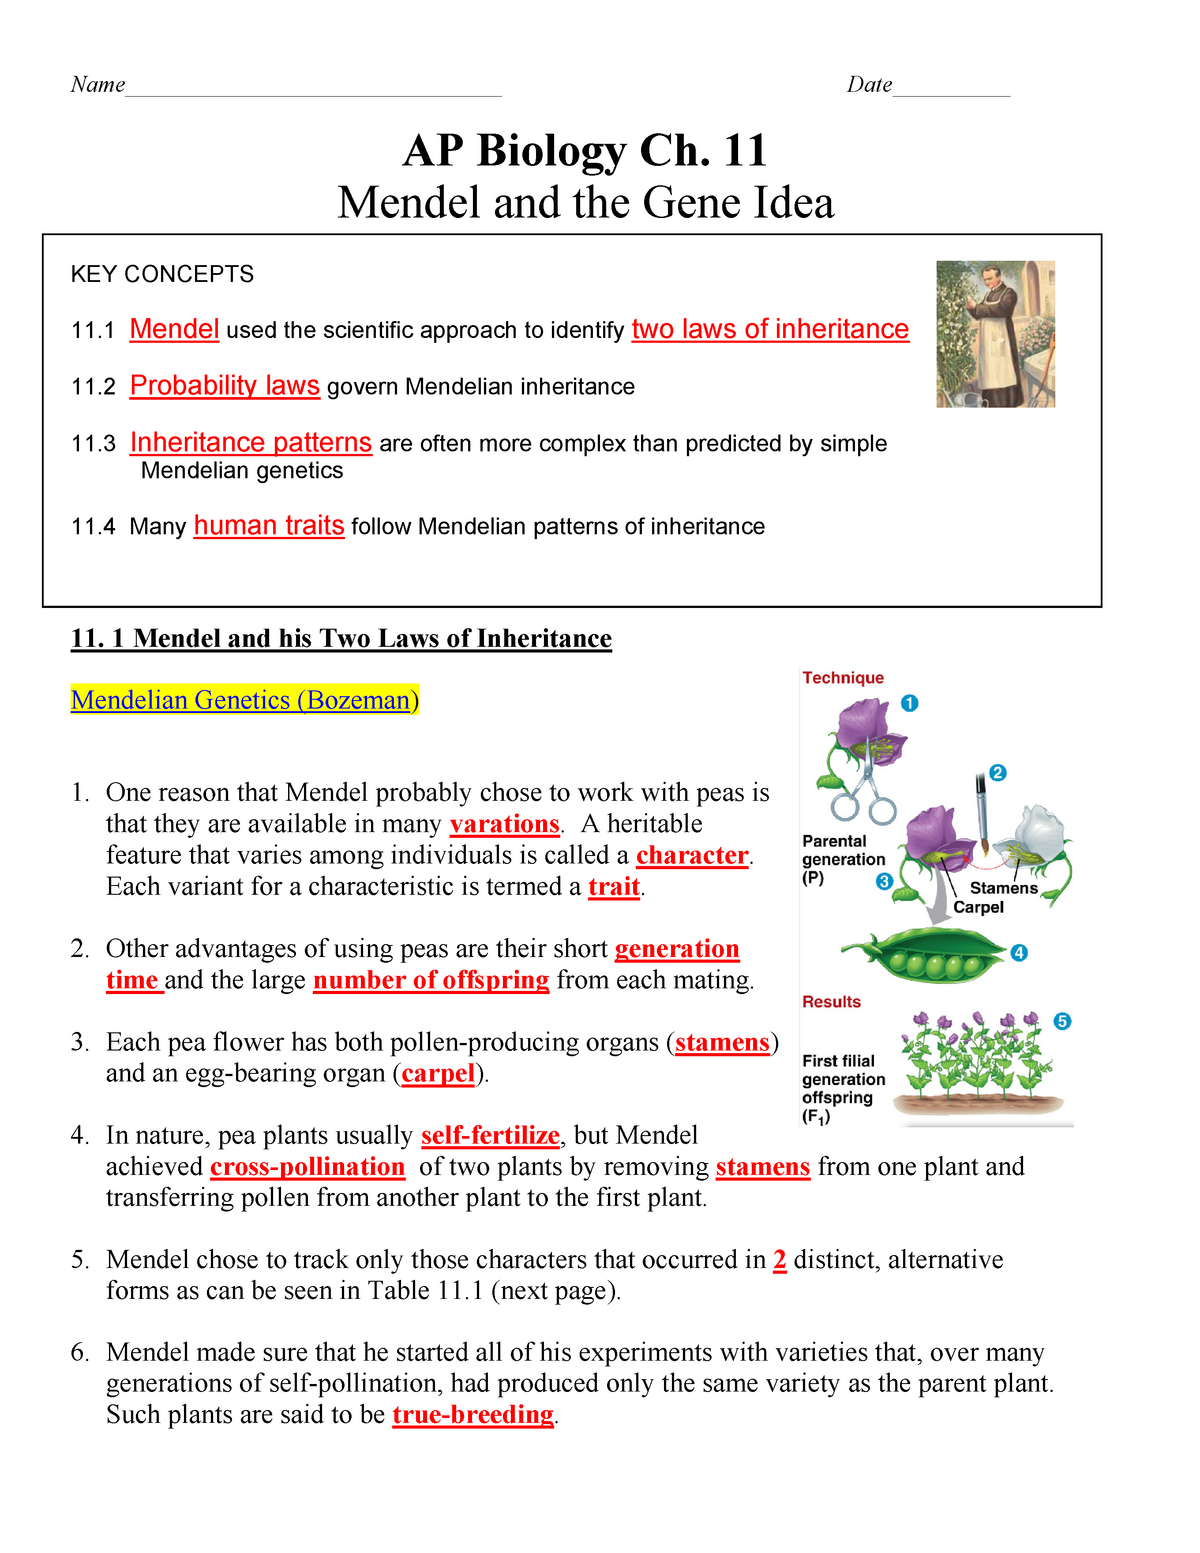 AP ch 21 Mendel KEY - notes answer key - BIO 21 - General College Intended For Mendelian Genetics Worksheet Answer Key